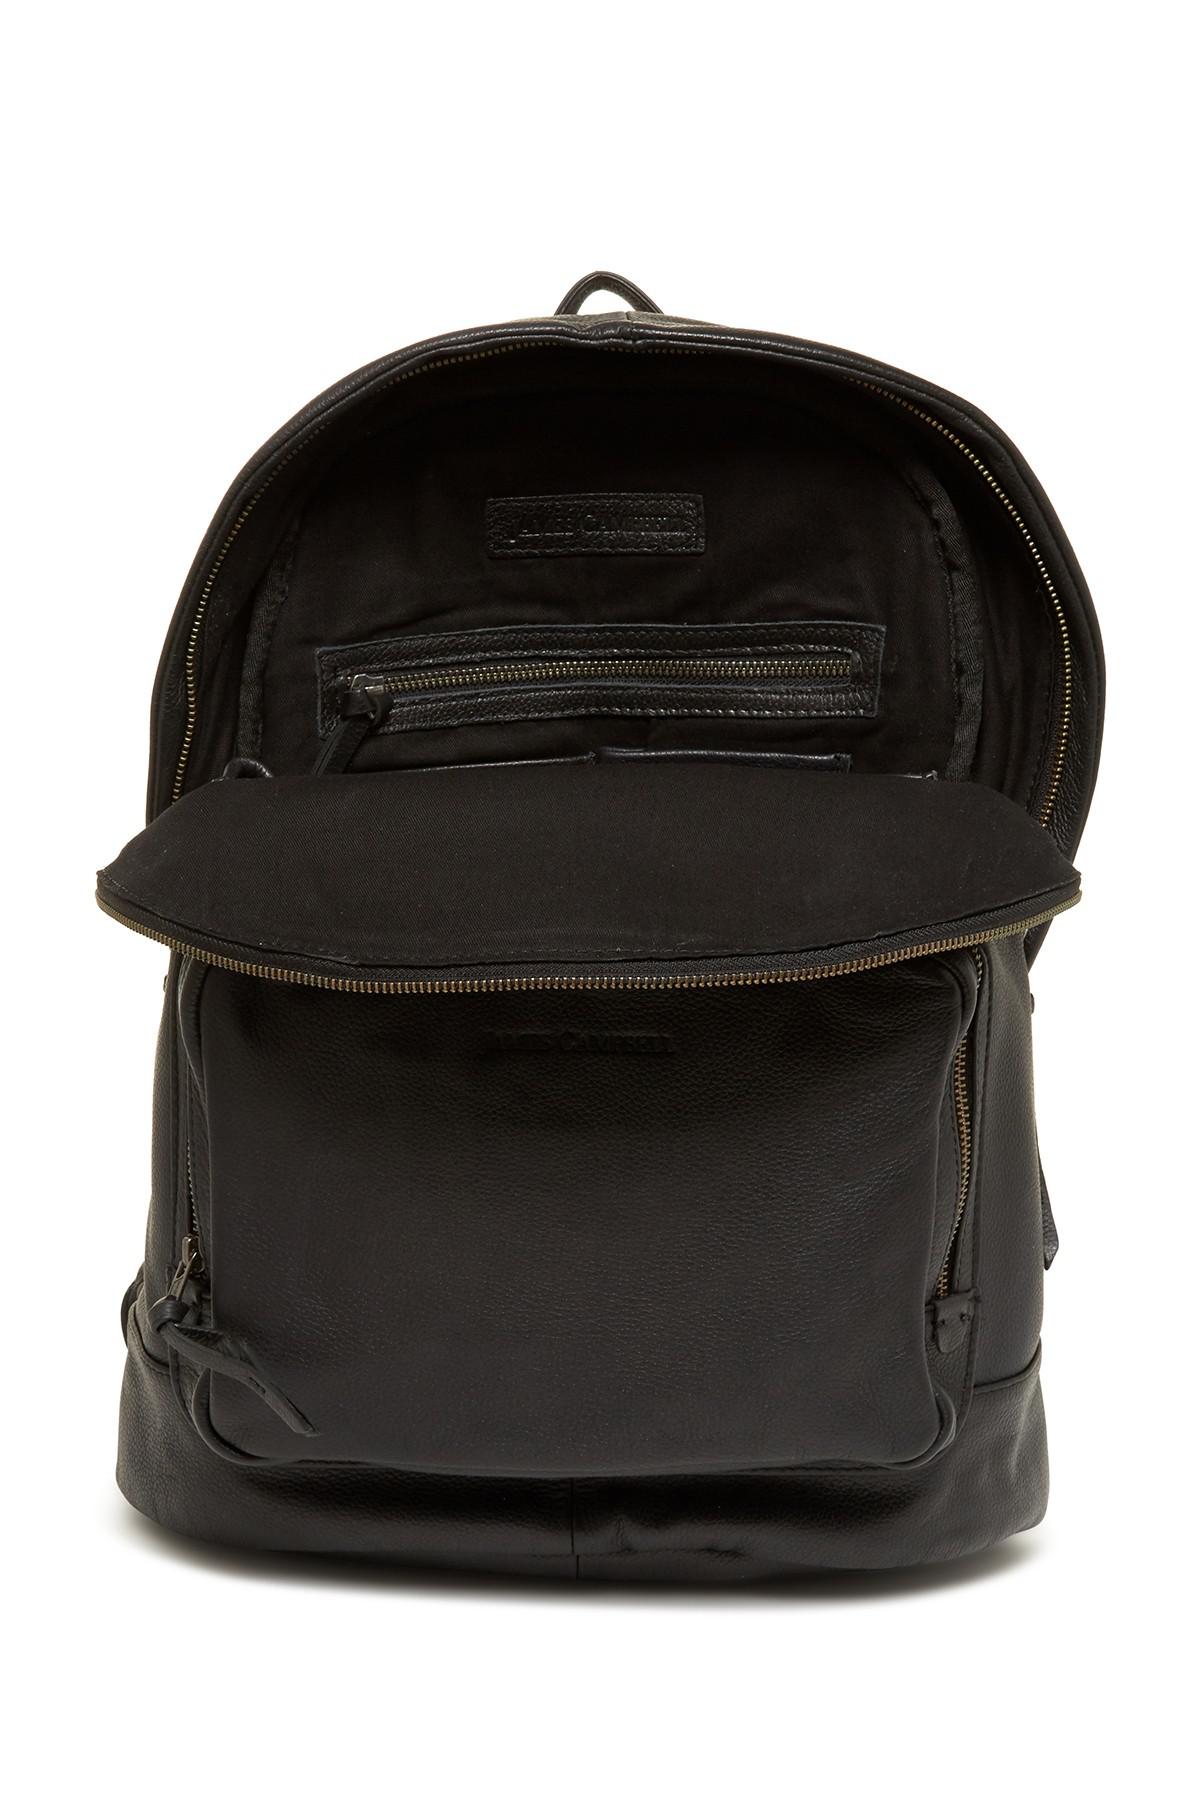 James Campbell Leather Backpack in Black for Men - Lyst